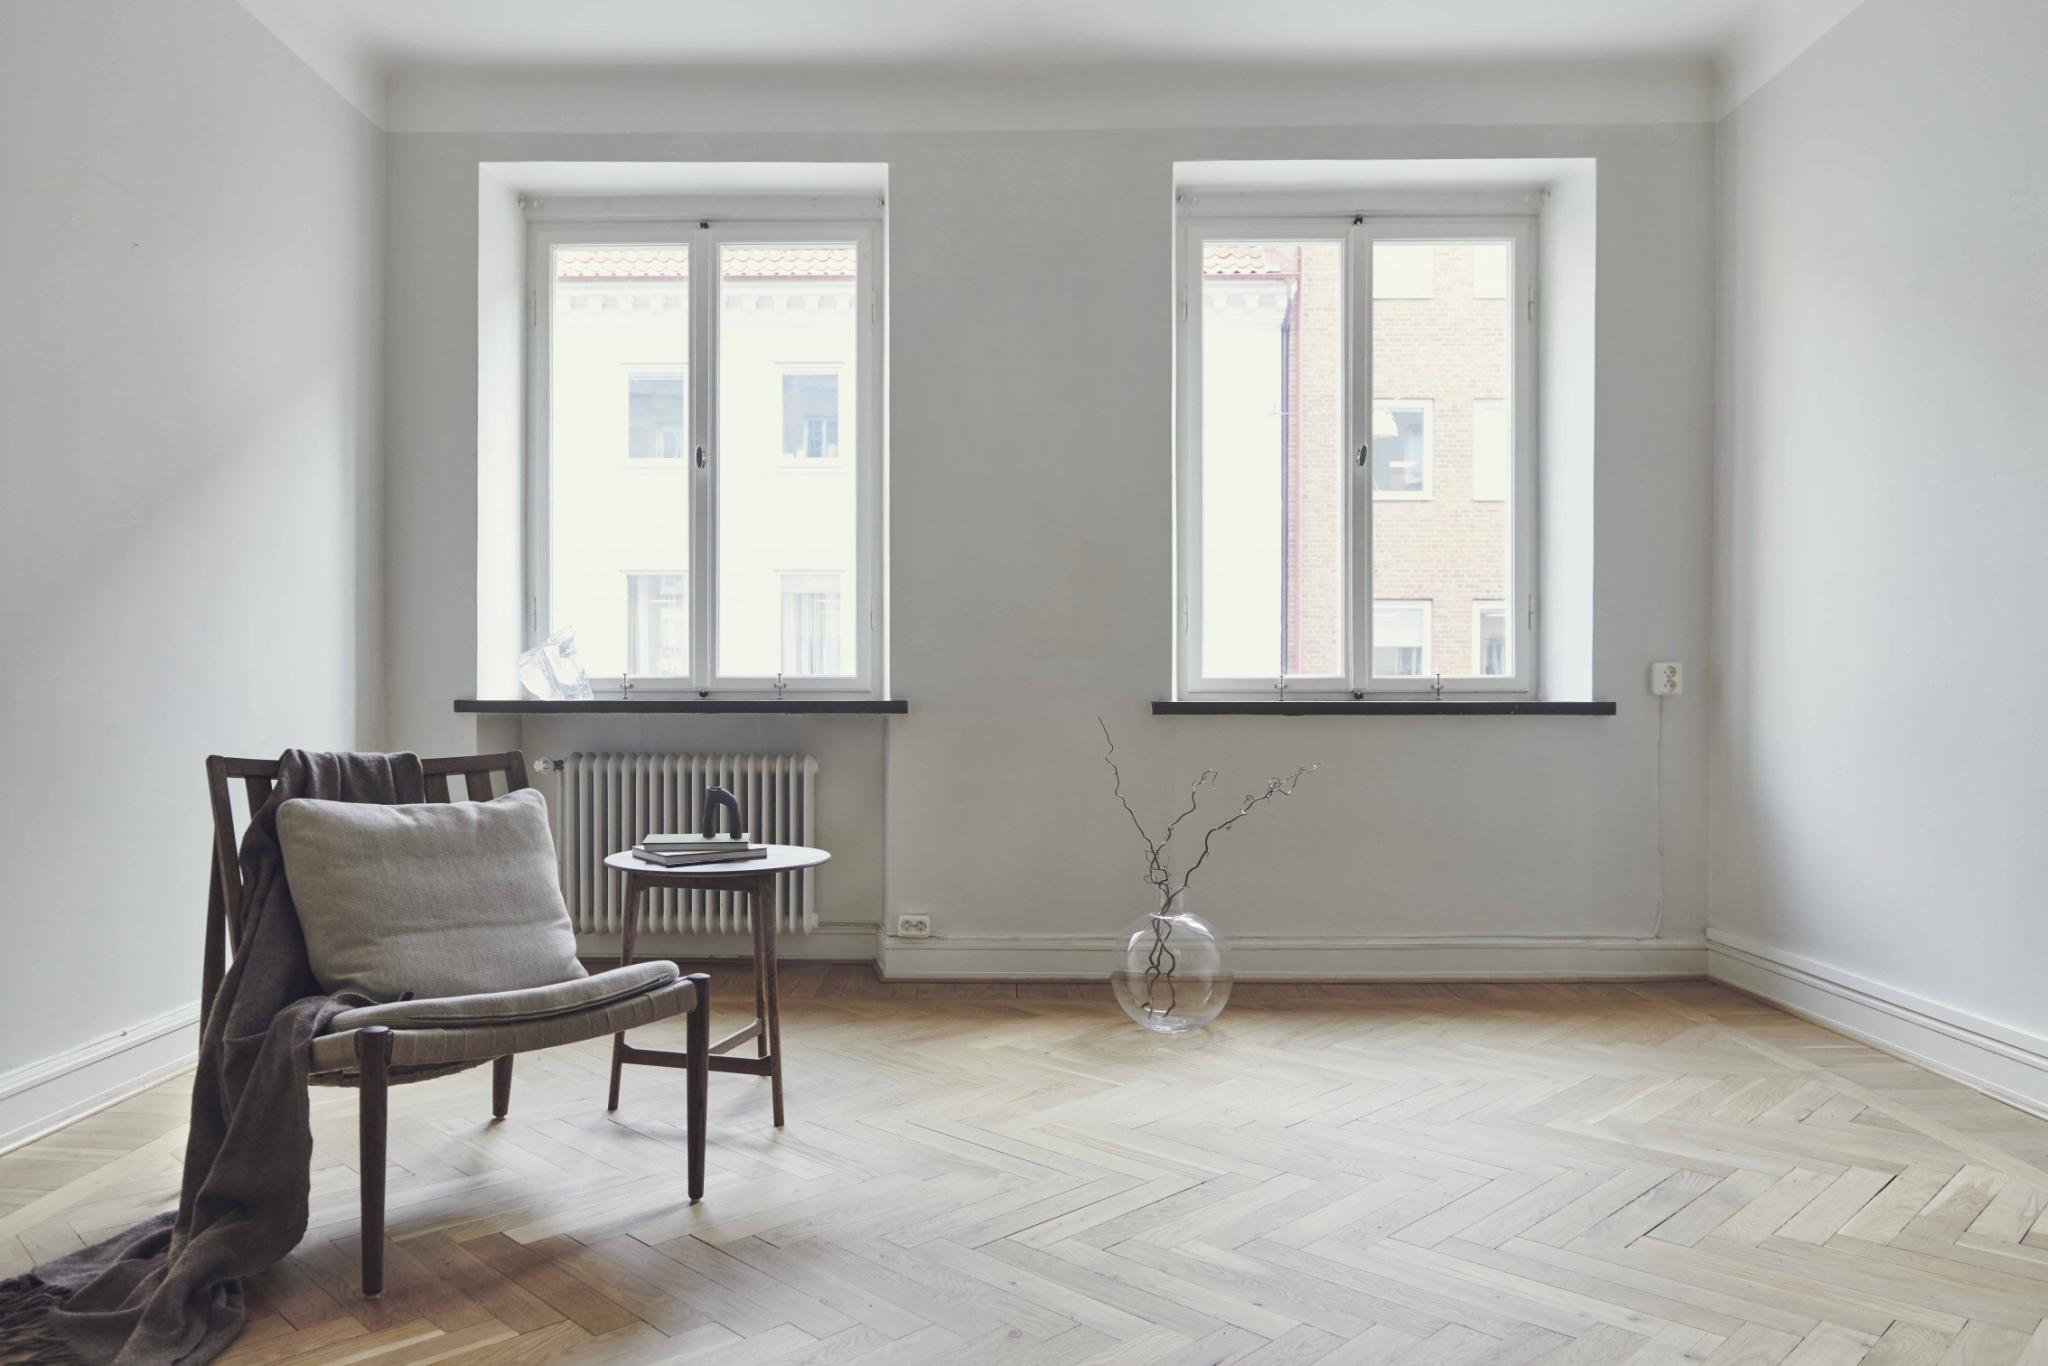 White Minimal Living Room with double Windows and herringbone flooring